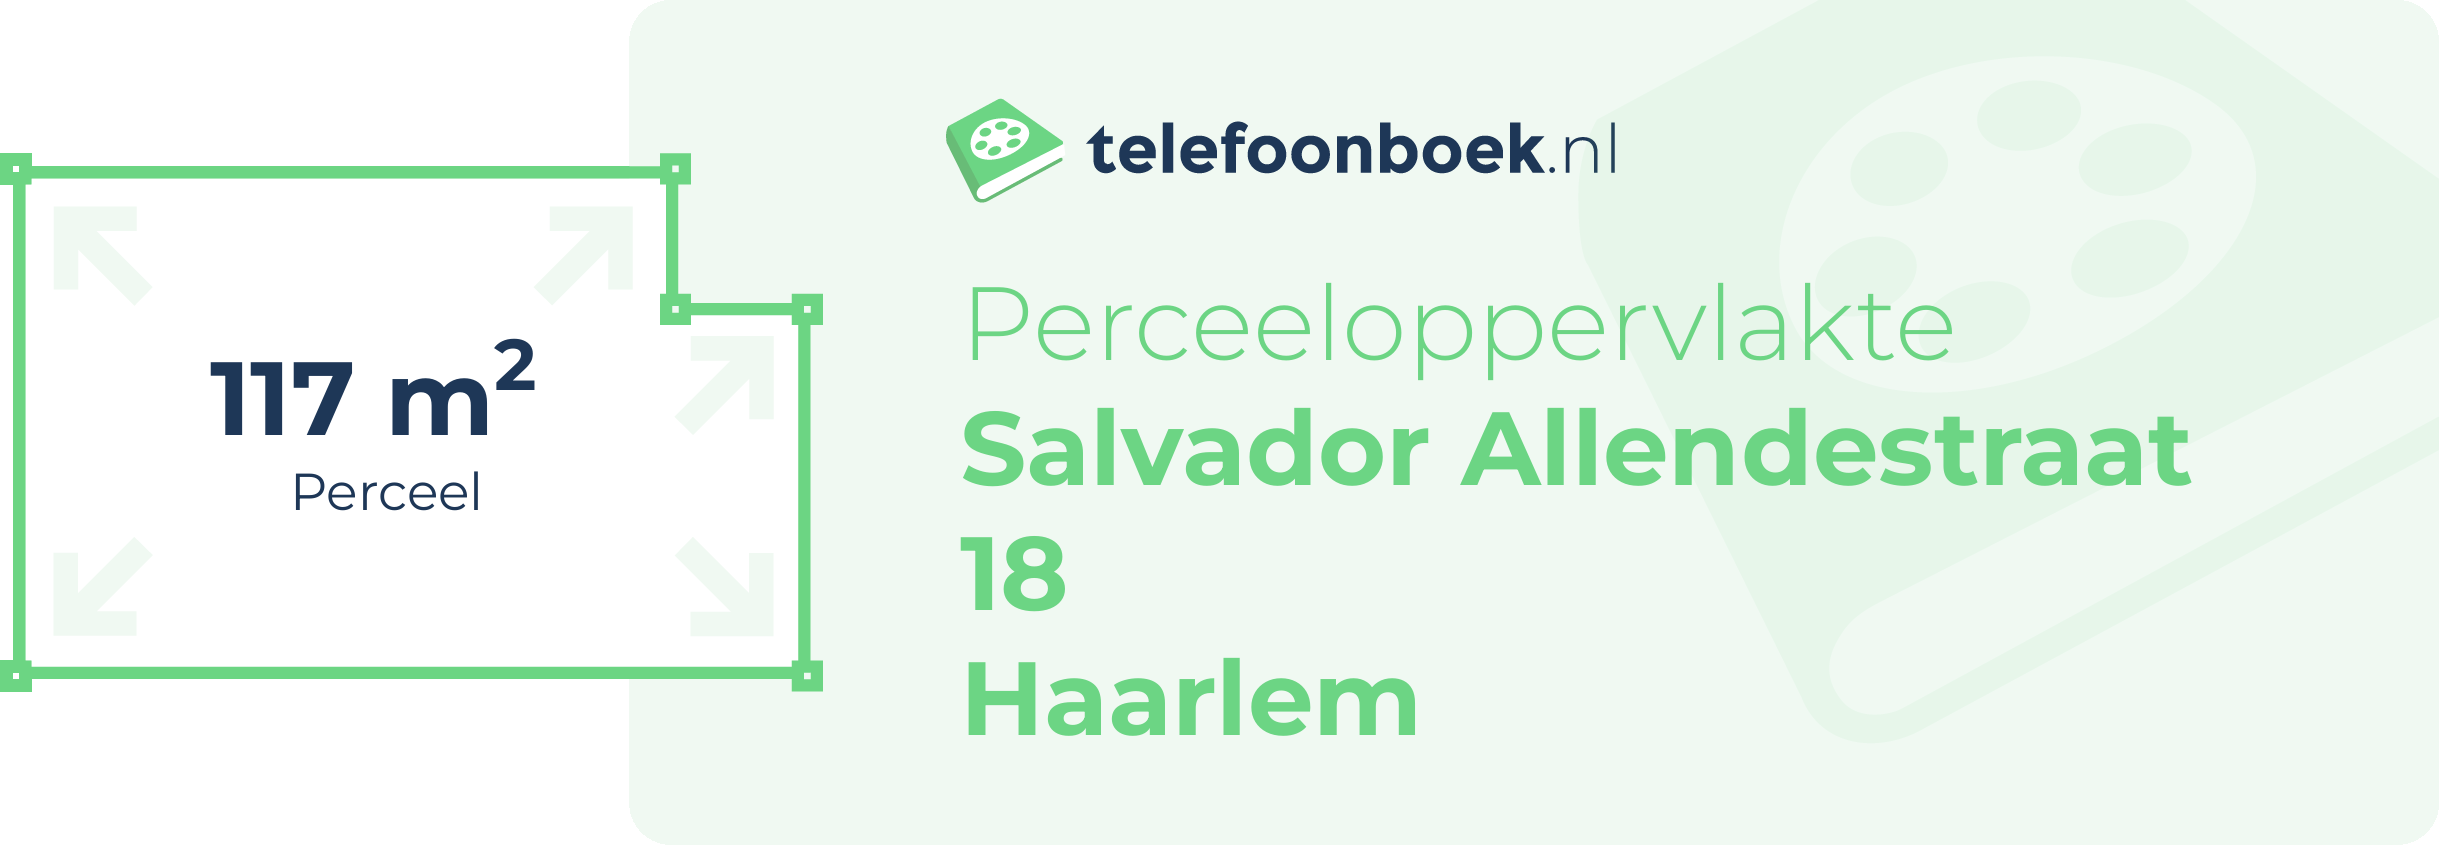 Perceeloppervlakte Salvador Allendestraat 18 Haarlem